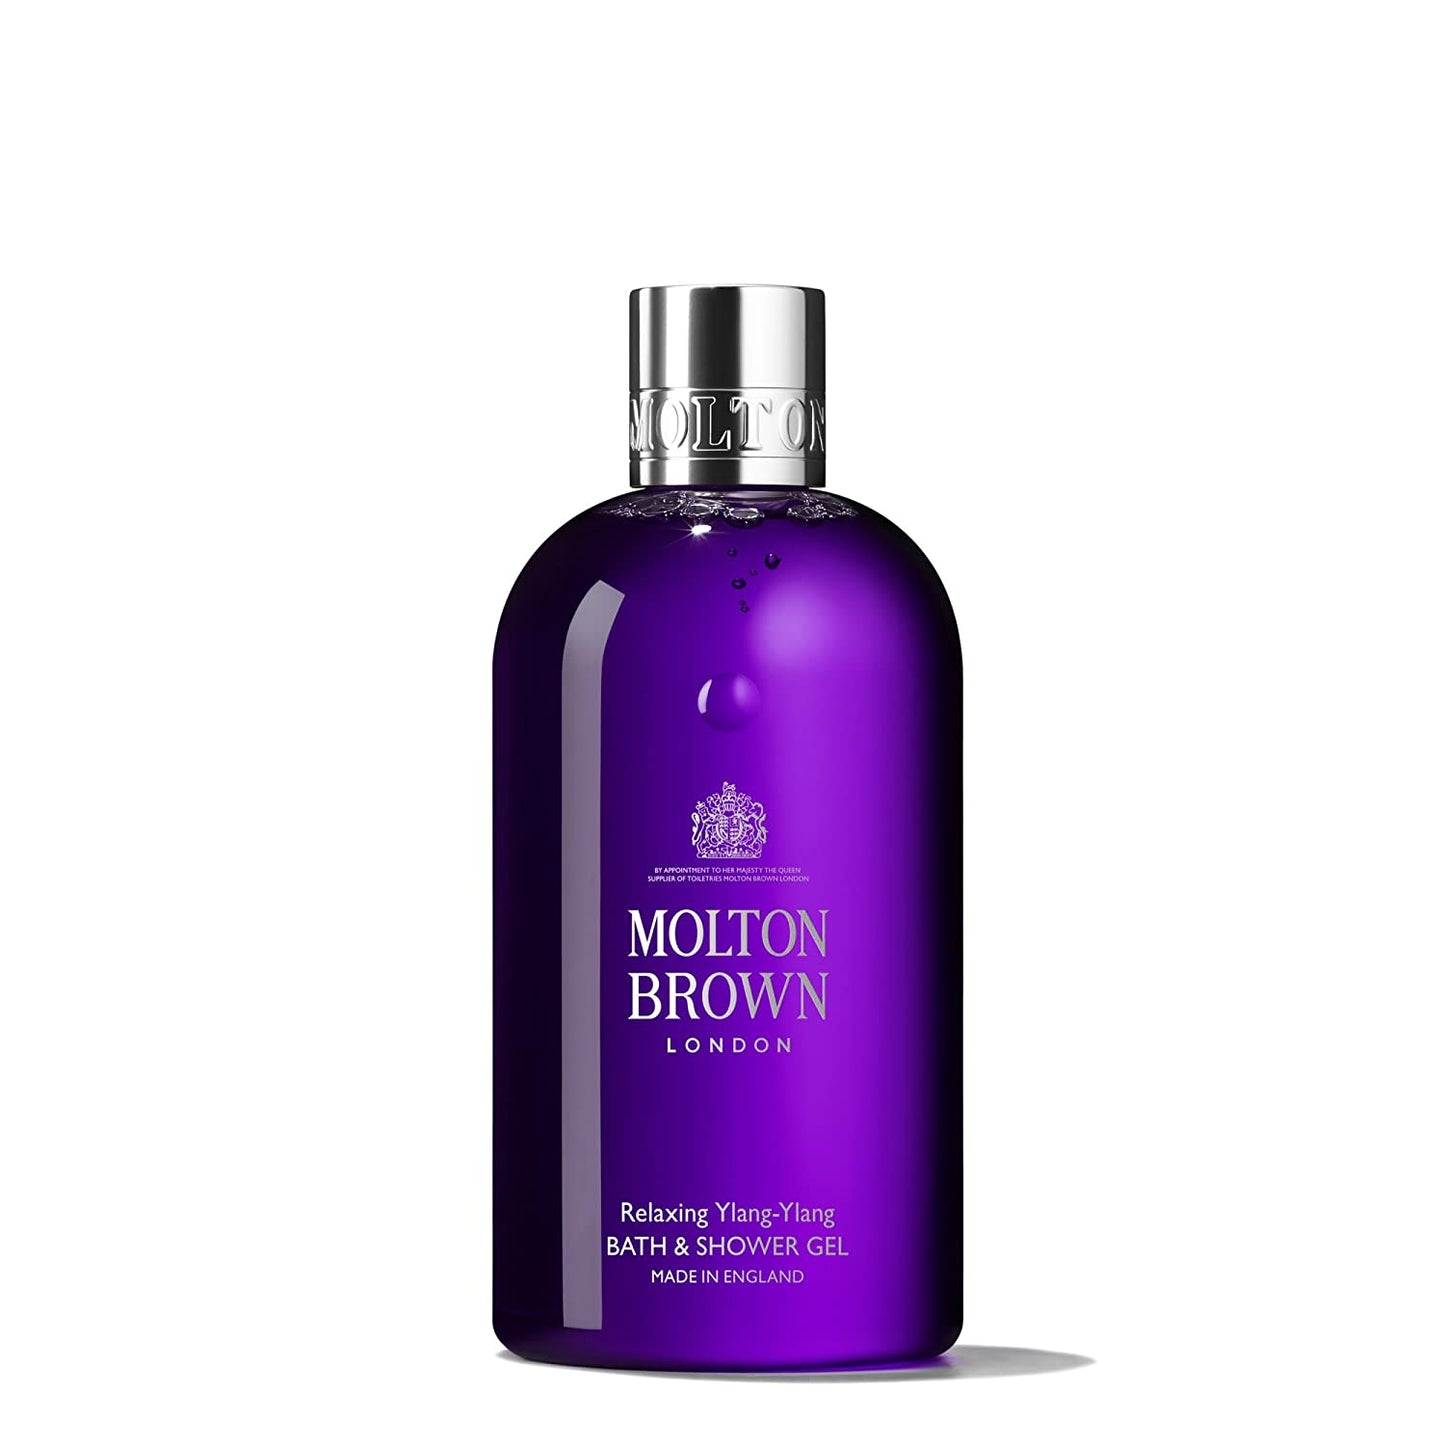 Molton Brown Relaxing Ylang-Ylang Bath & Shower Gel